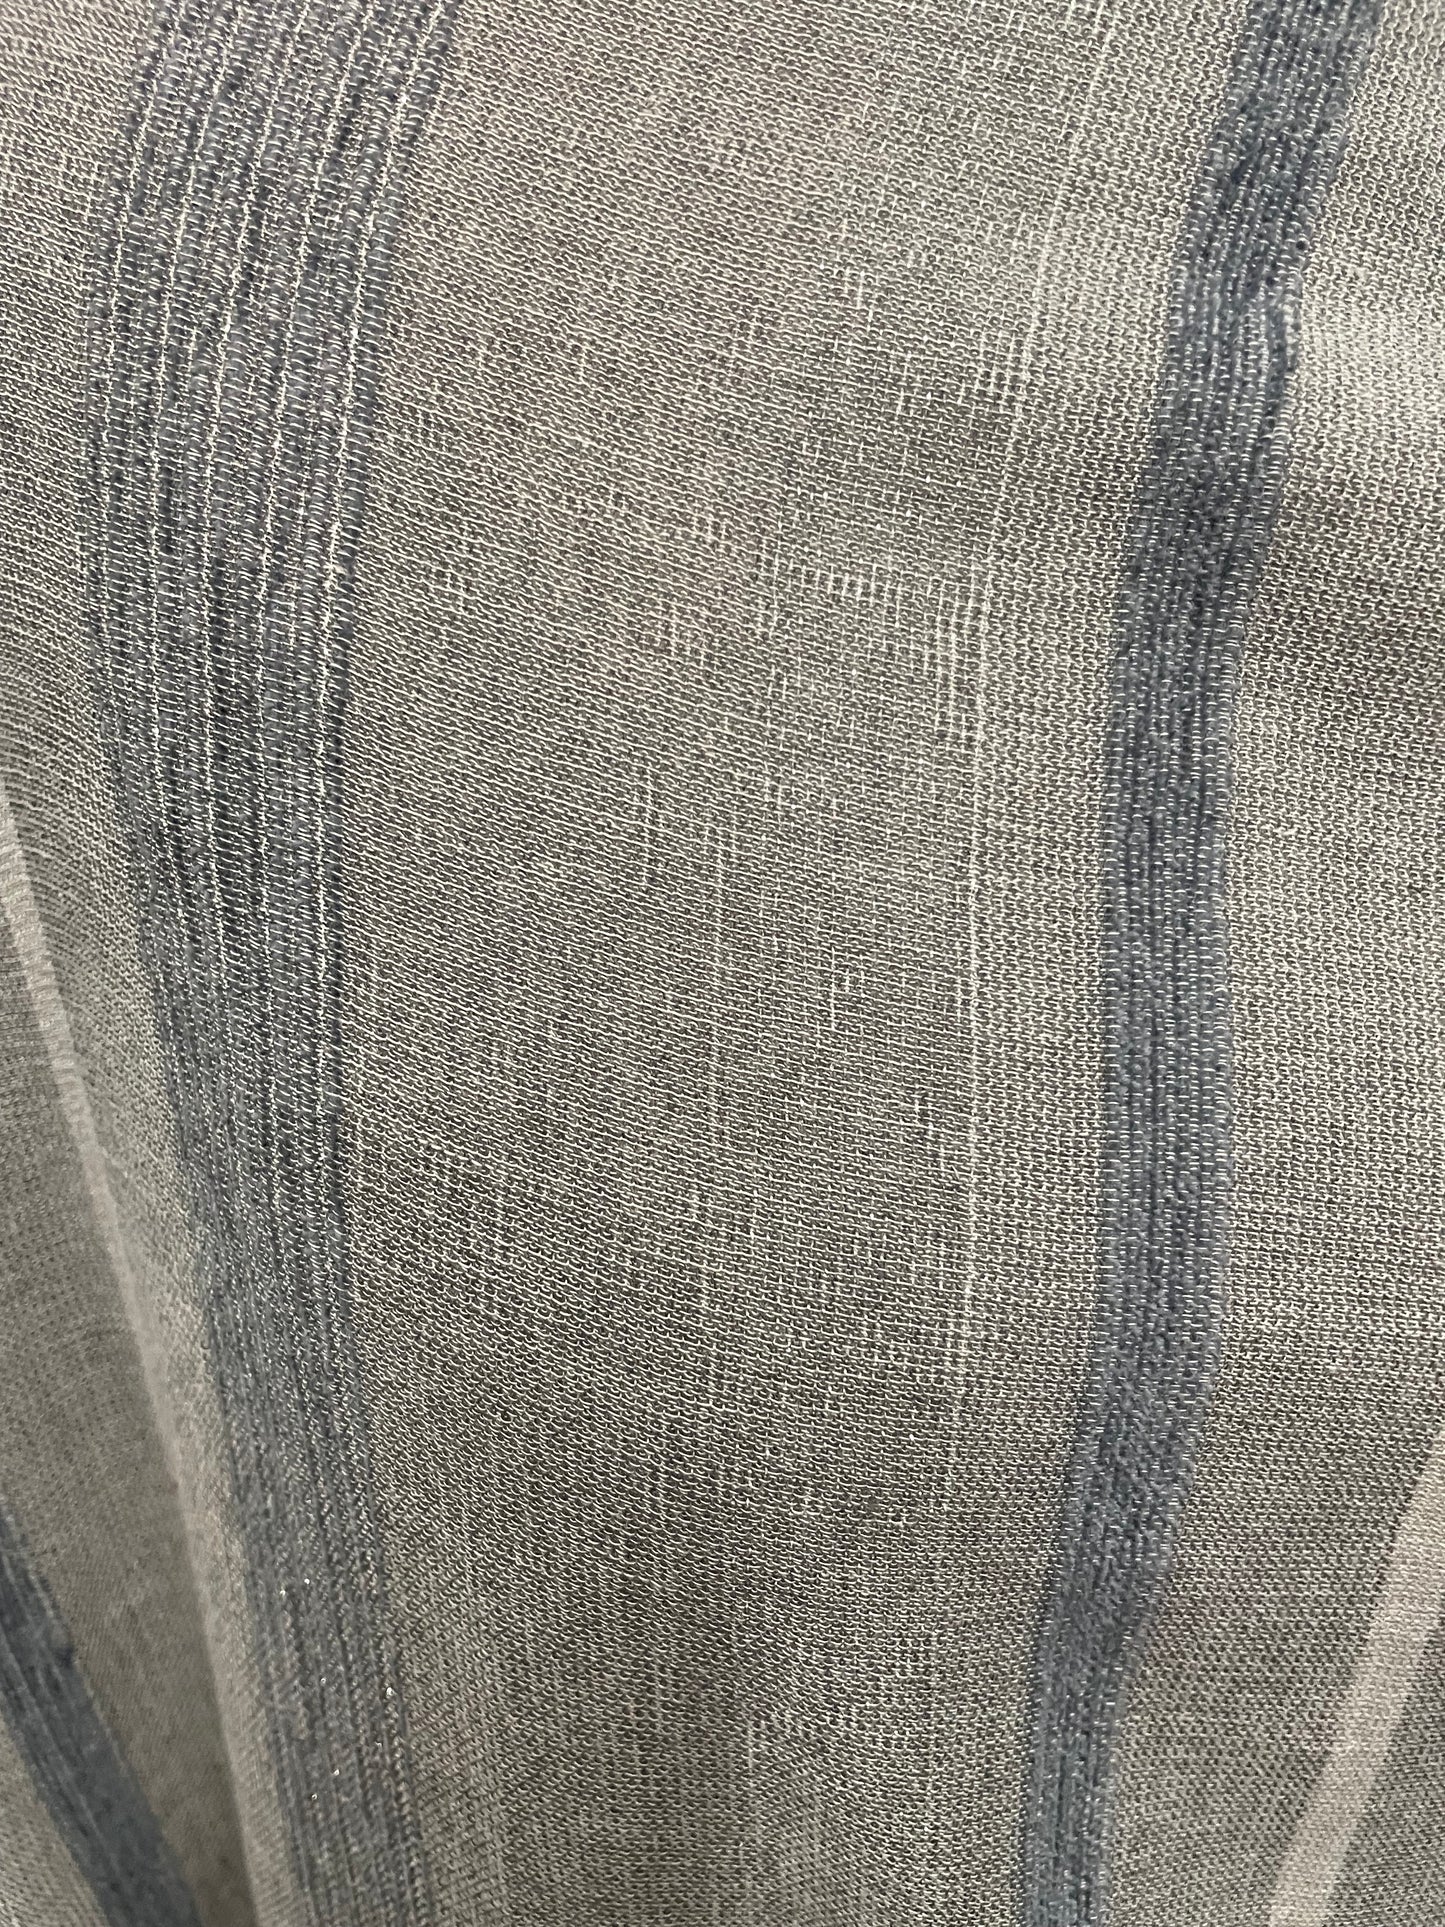 Stripe Print Cotton Voile - Blue, Grey, Off White, Lurex